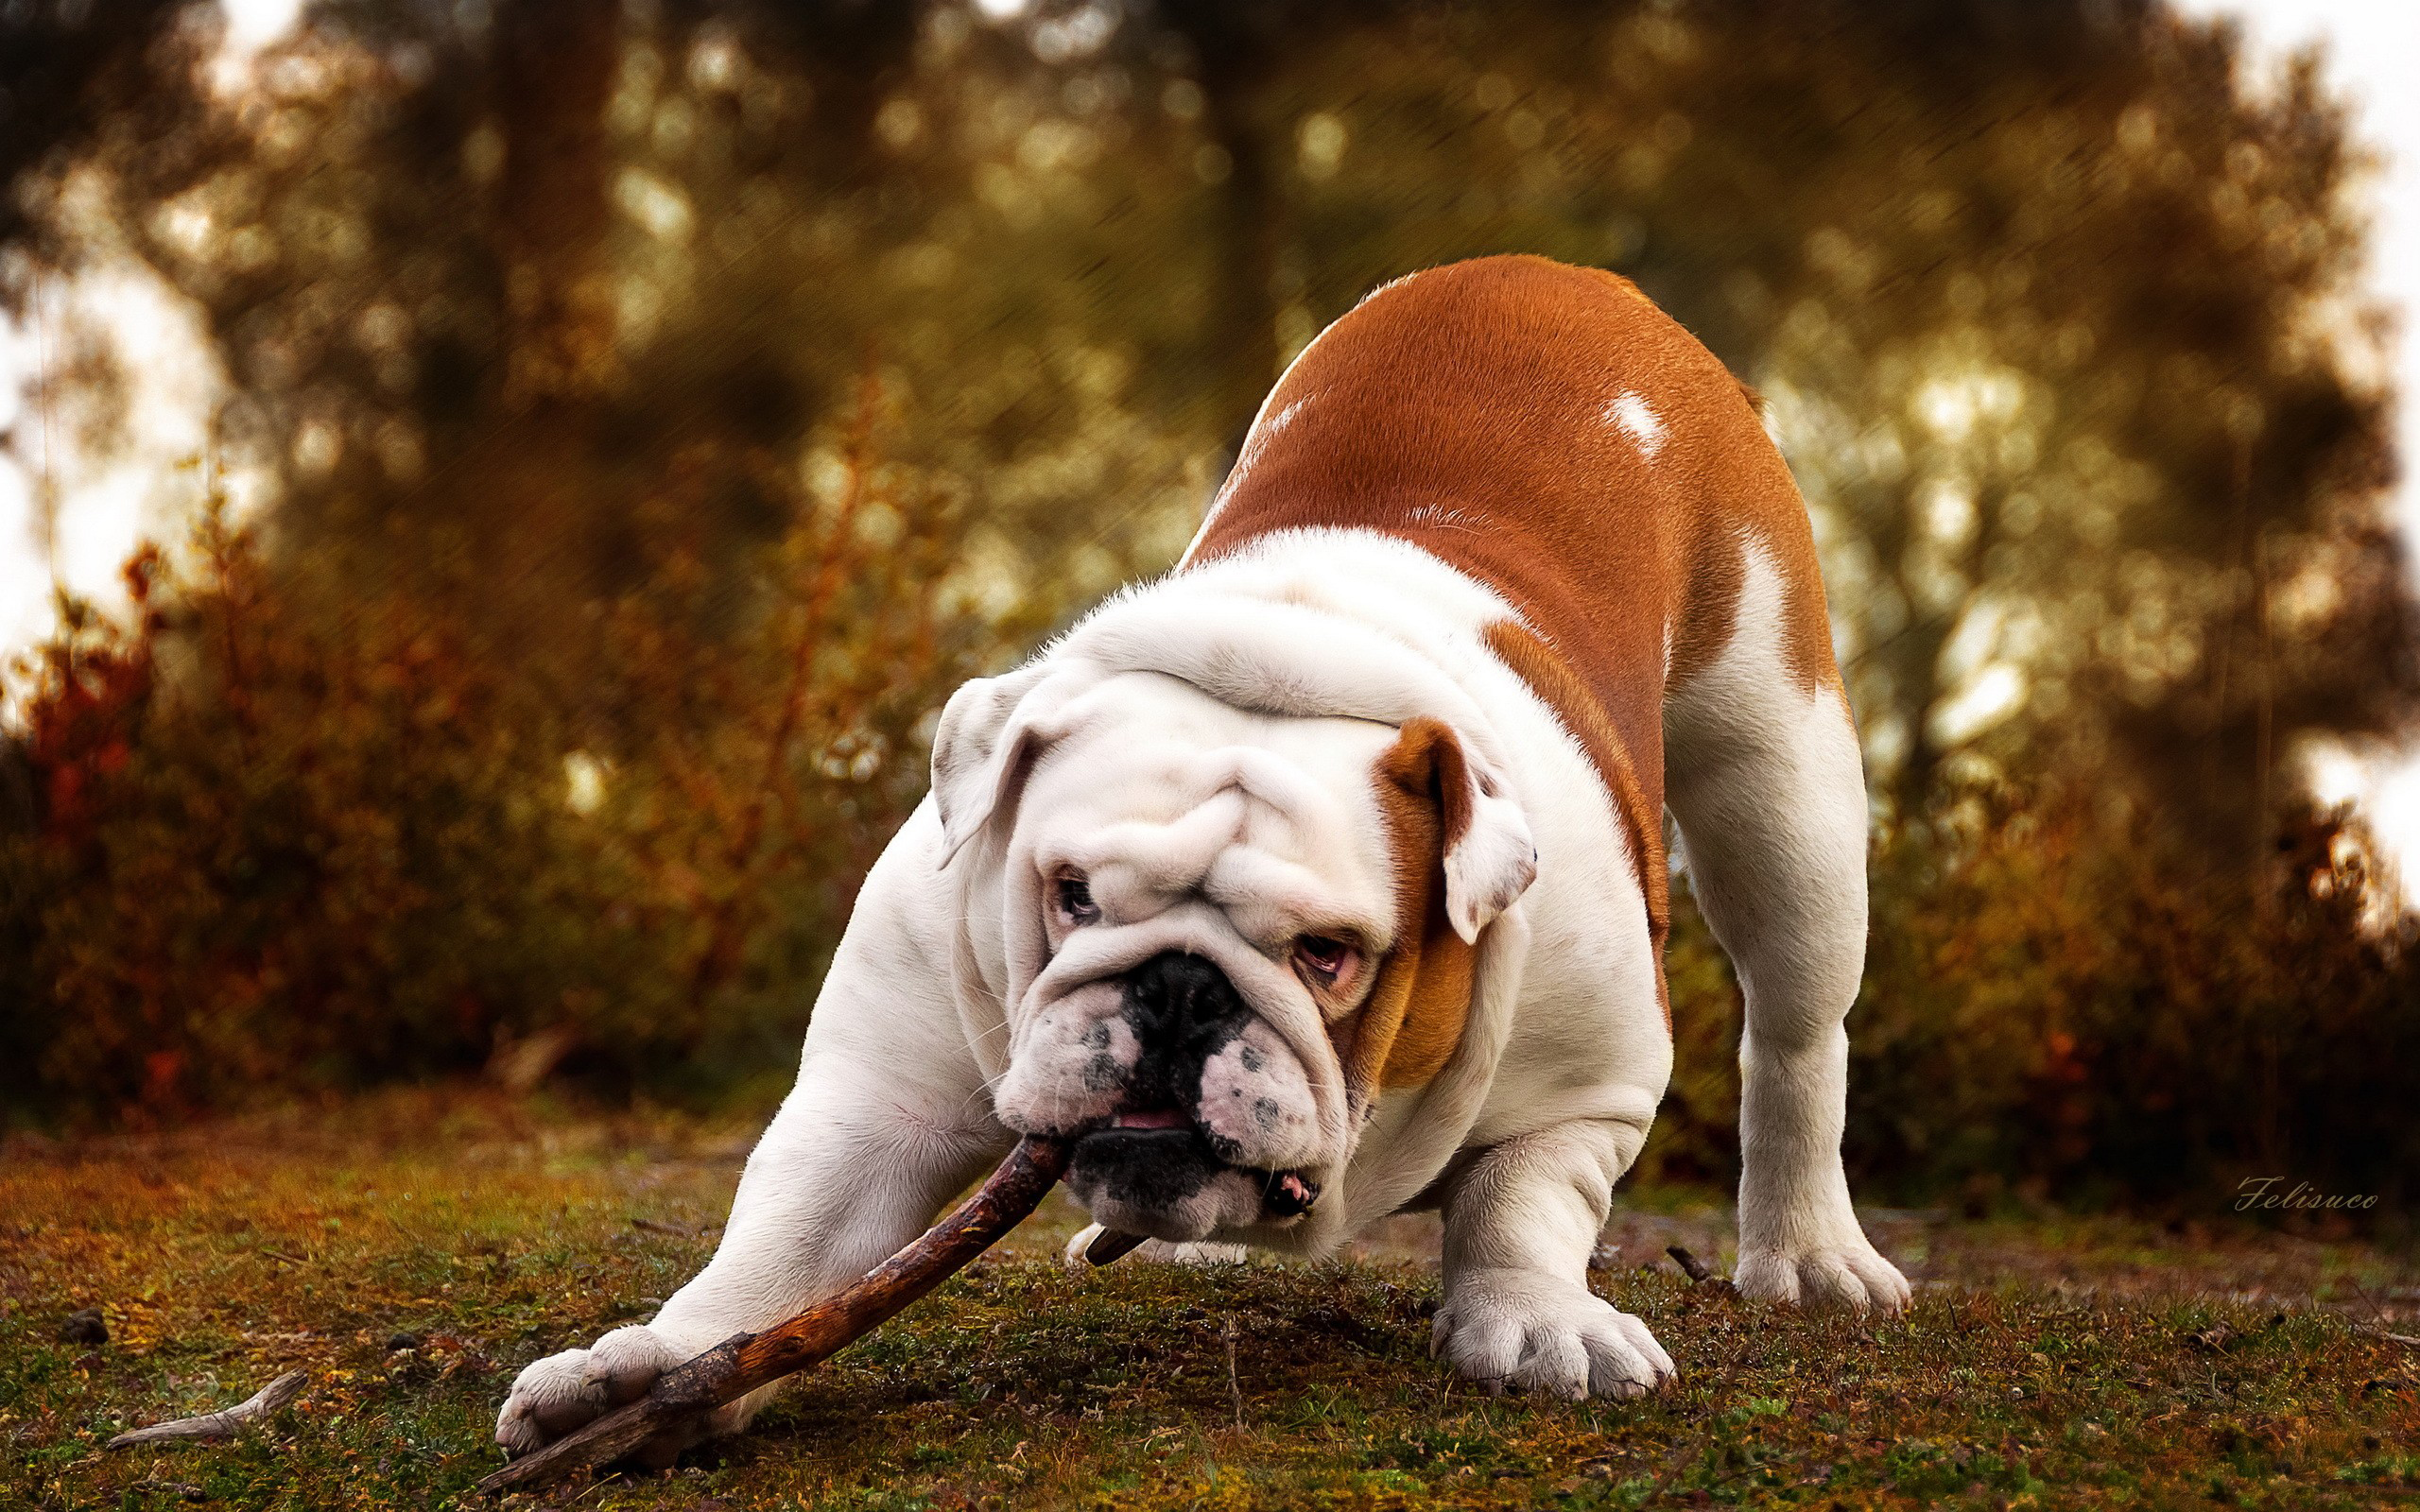 Best Bulldog Animal Wallpaper Full HD With